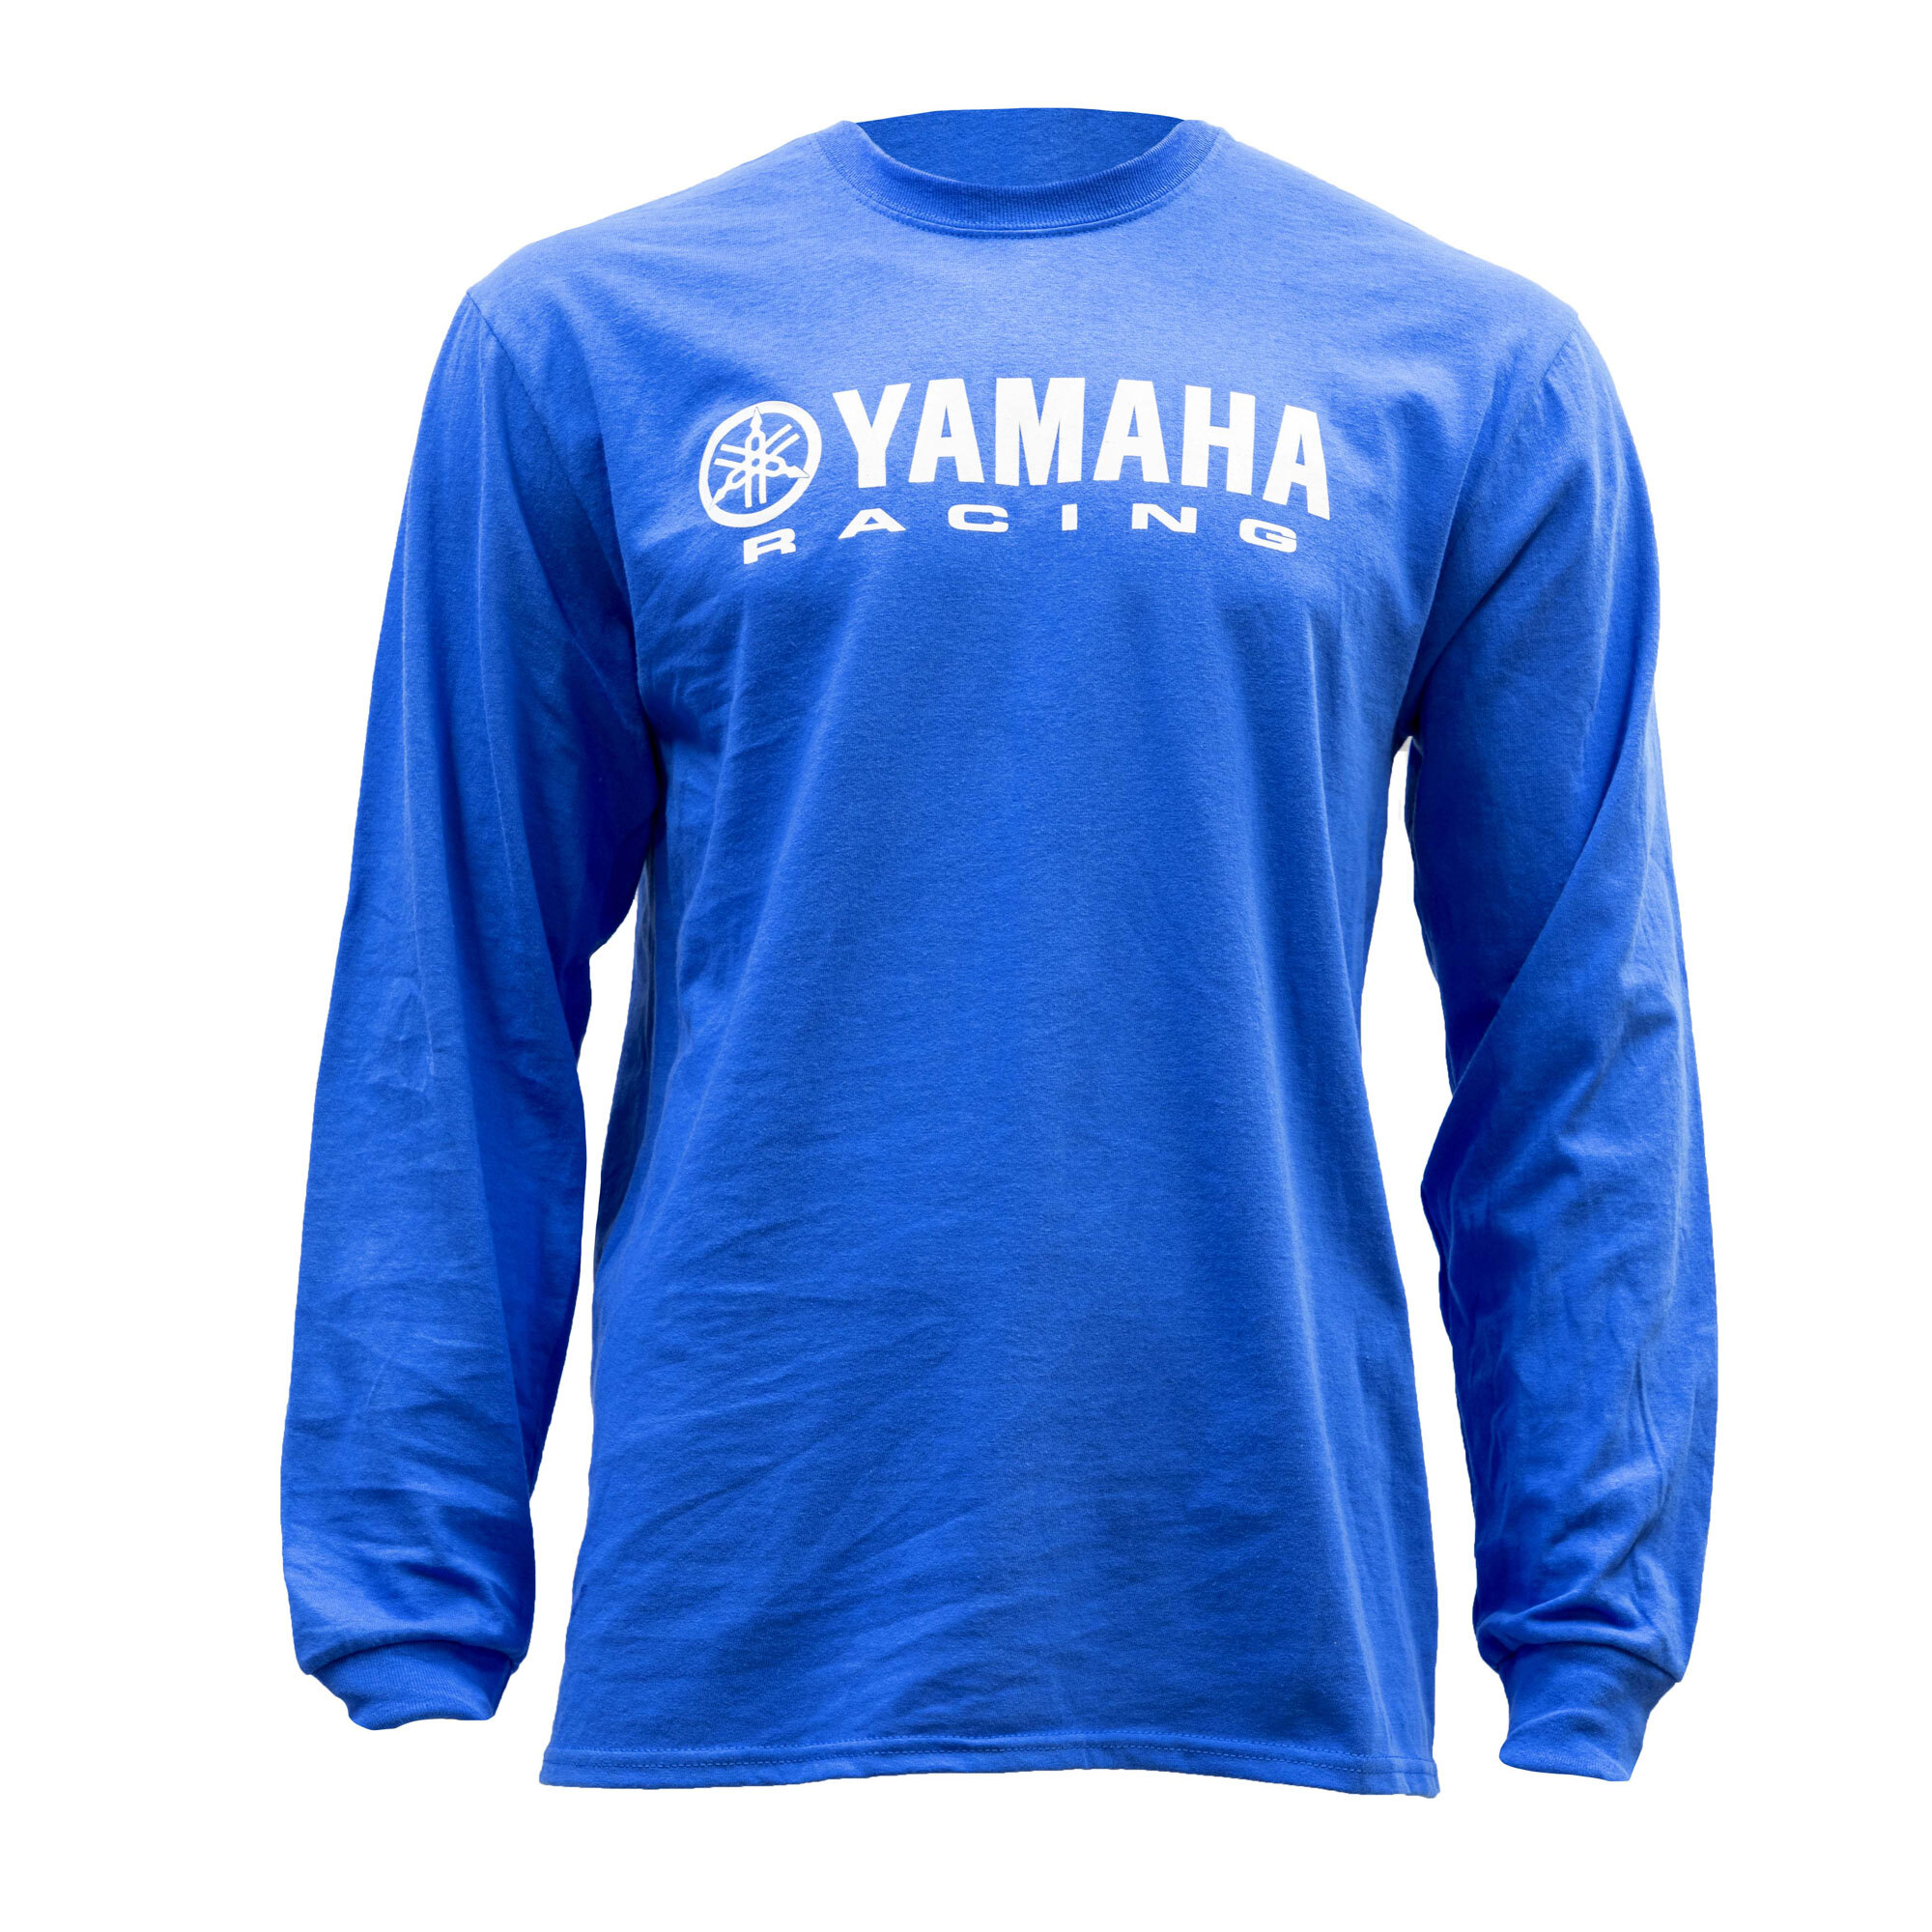 Yamaha Racing Long Sleeve T Shirt Small blue